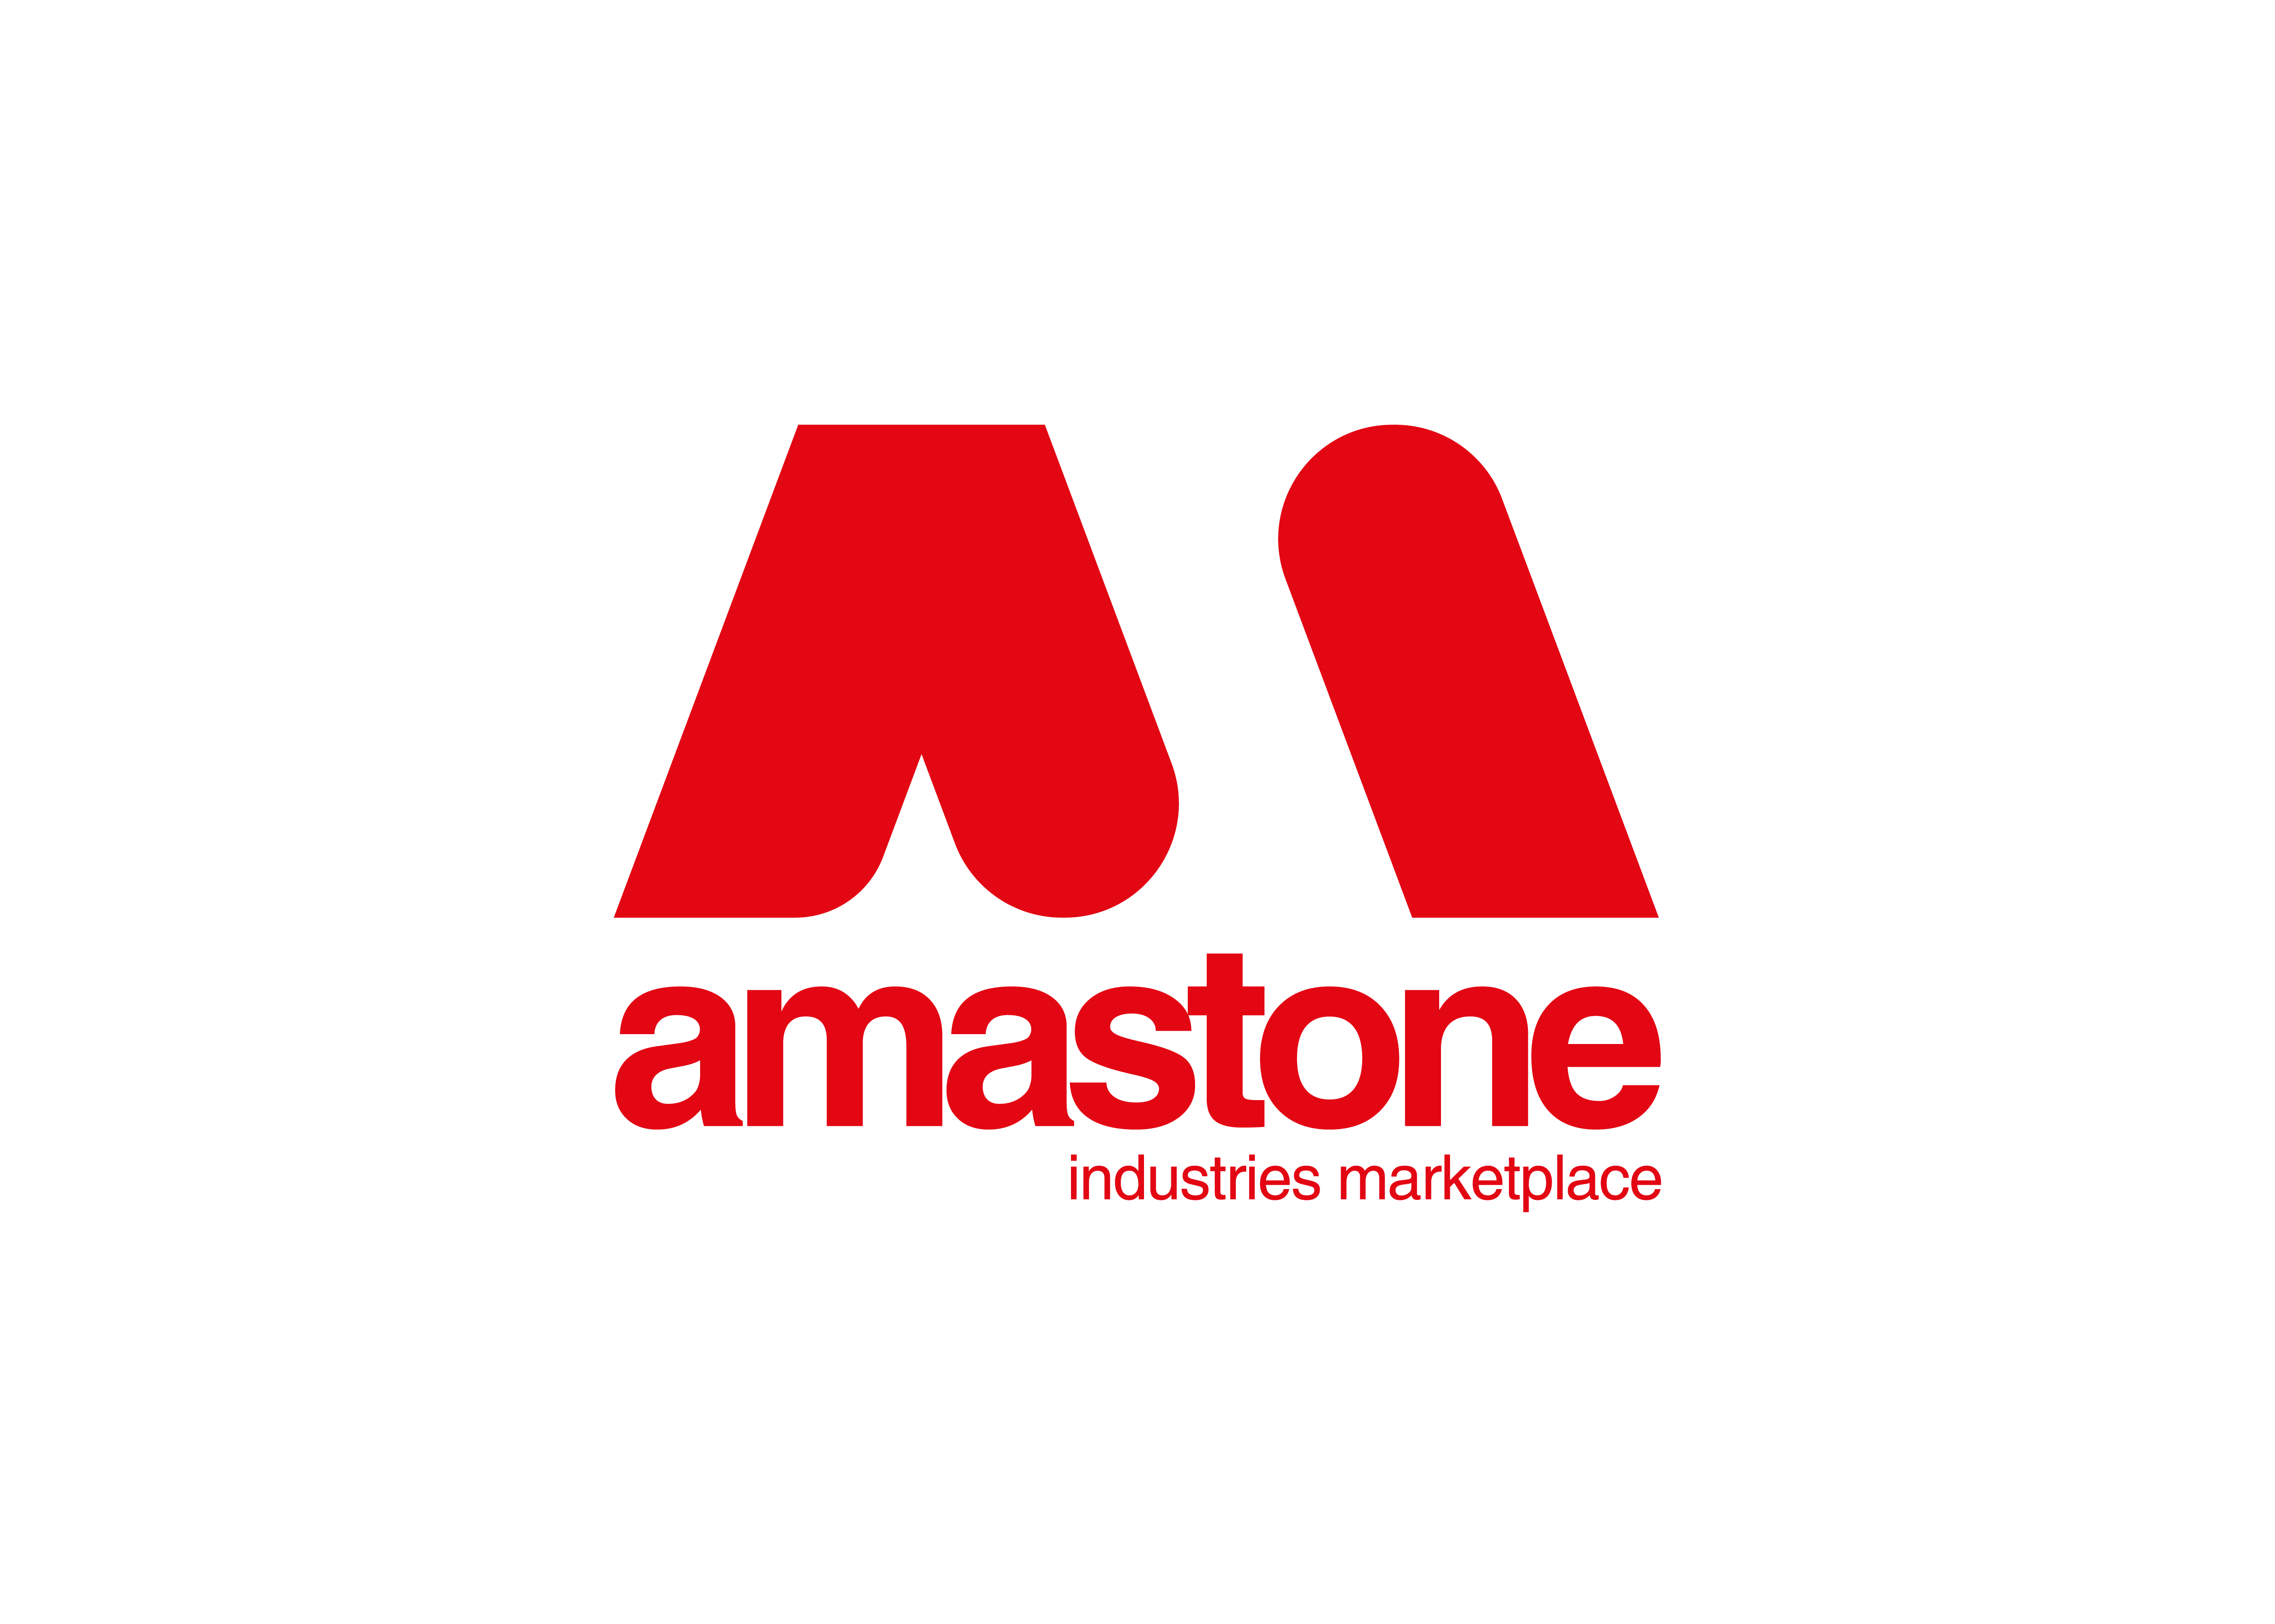 Amastone.com